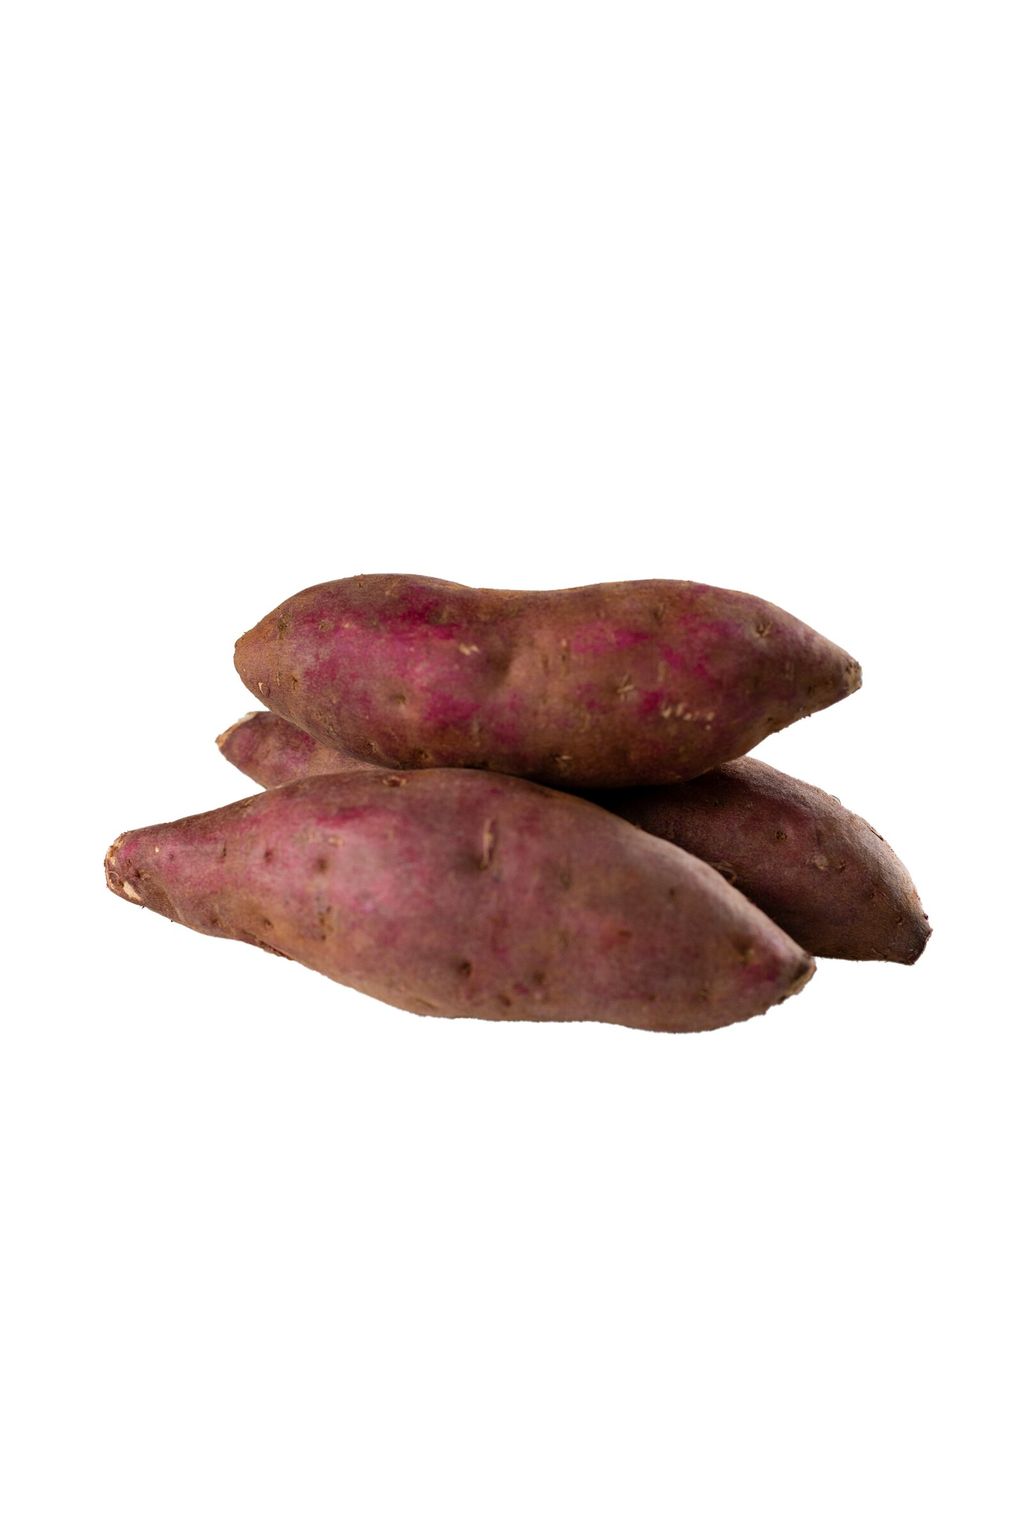 Sweet Potato 1 (White).jpg